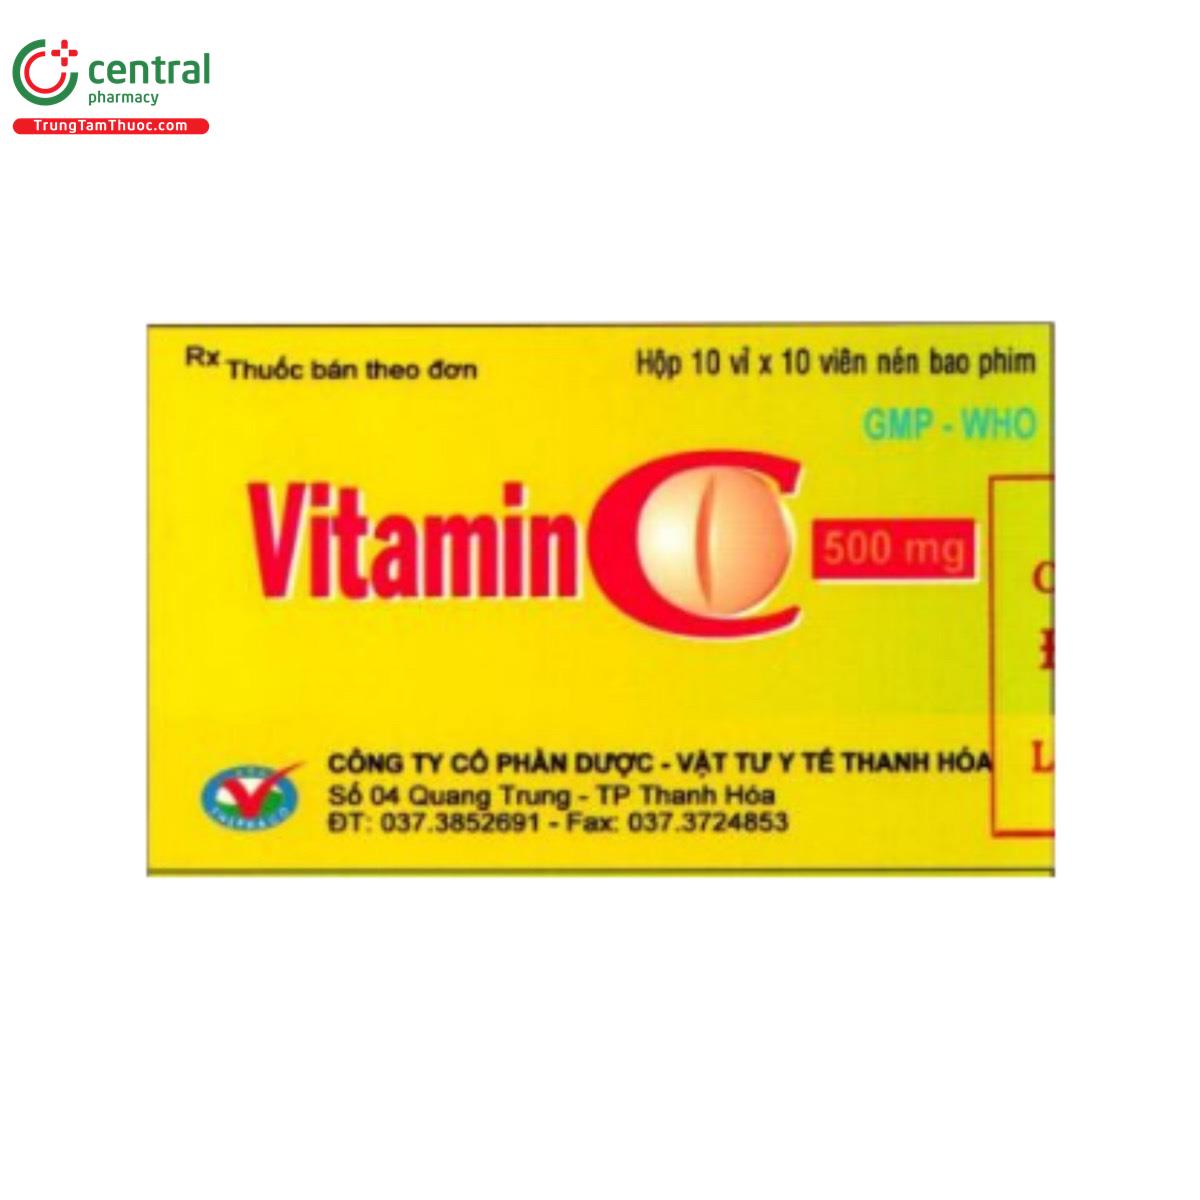 vitaminc 500mg thephaco 3 J3377